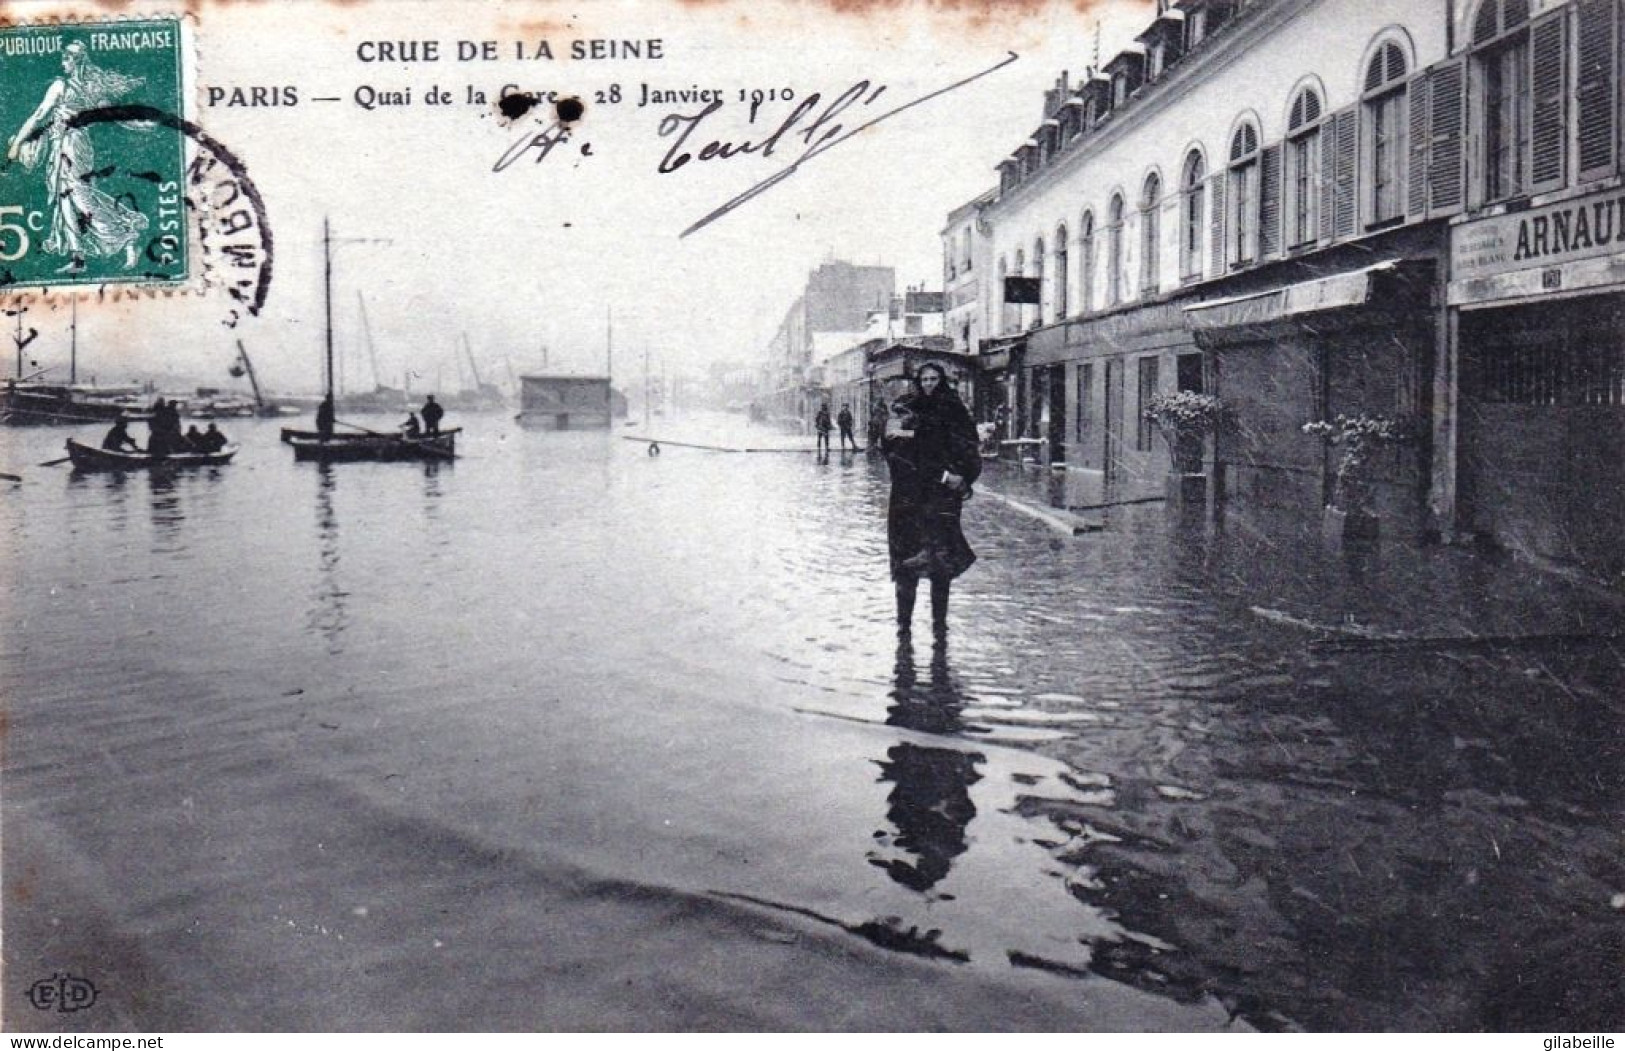 75 - PARIS - Crue De La Seine - Quai De La Gare - Paris Flood, 1910